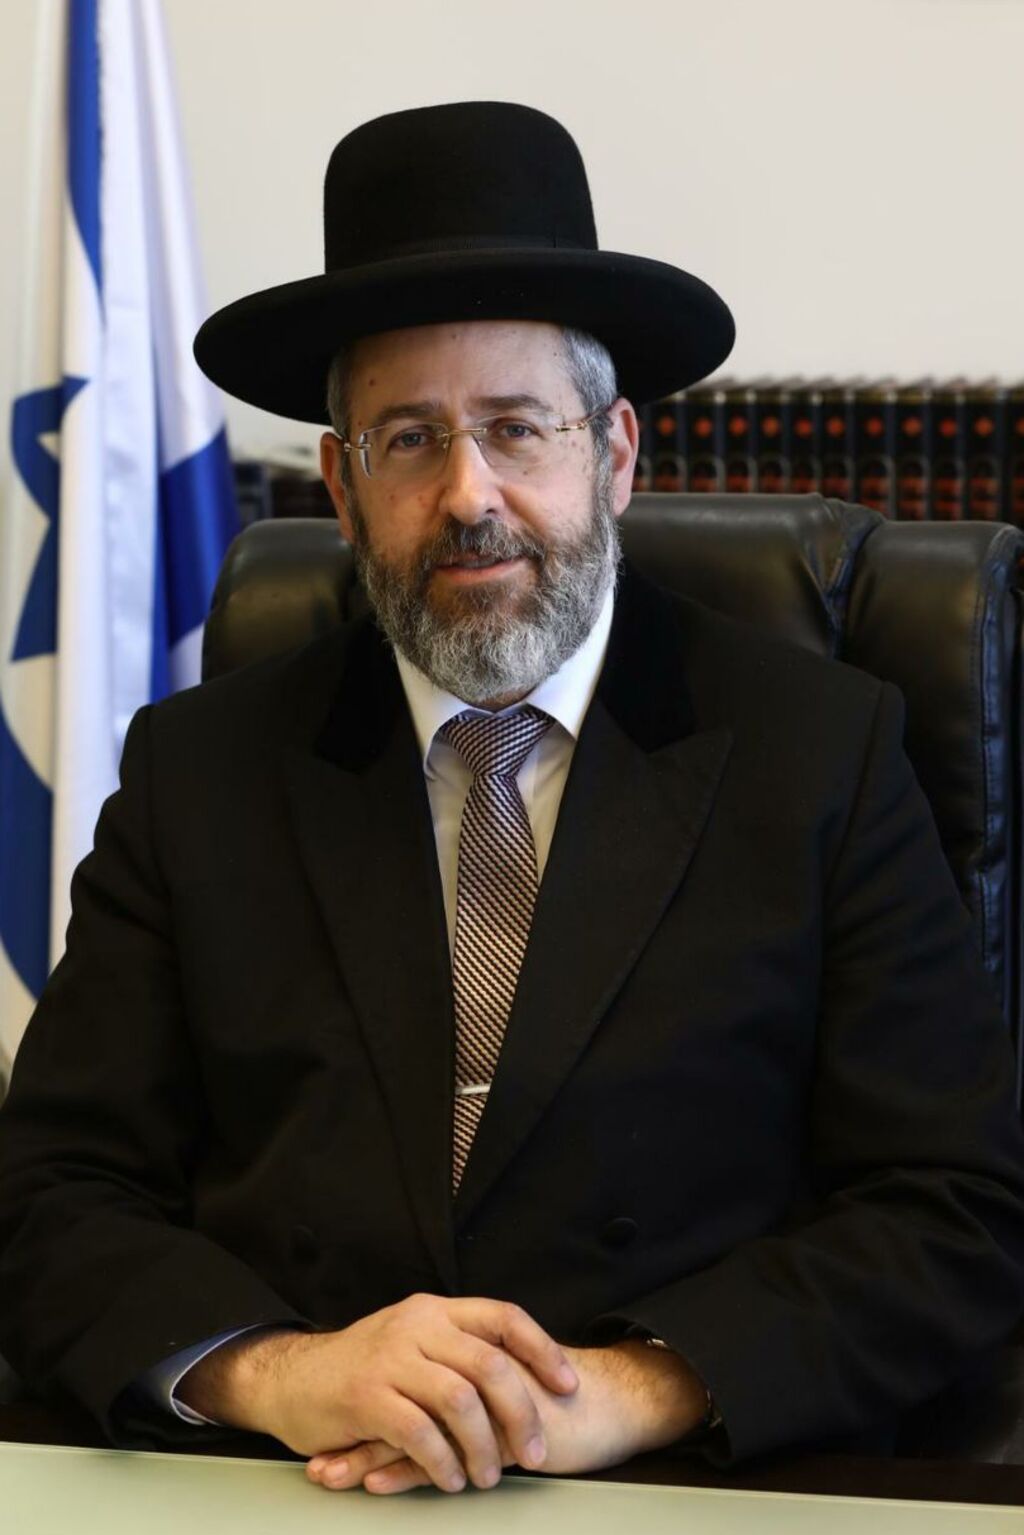  Israel's Chief Rabbi David Lau 